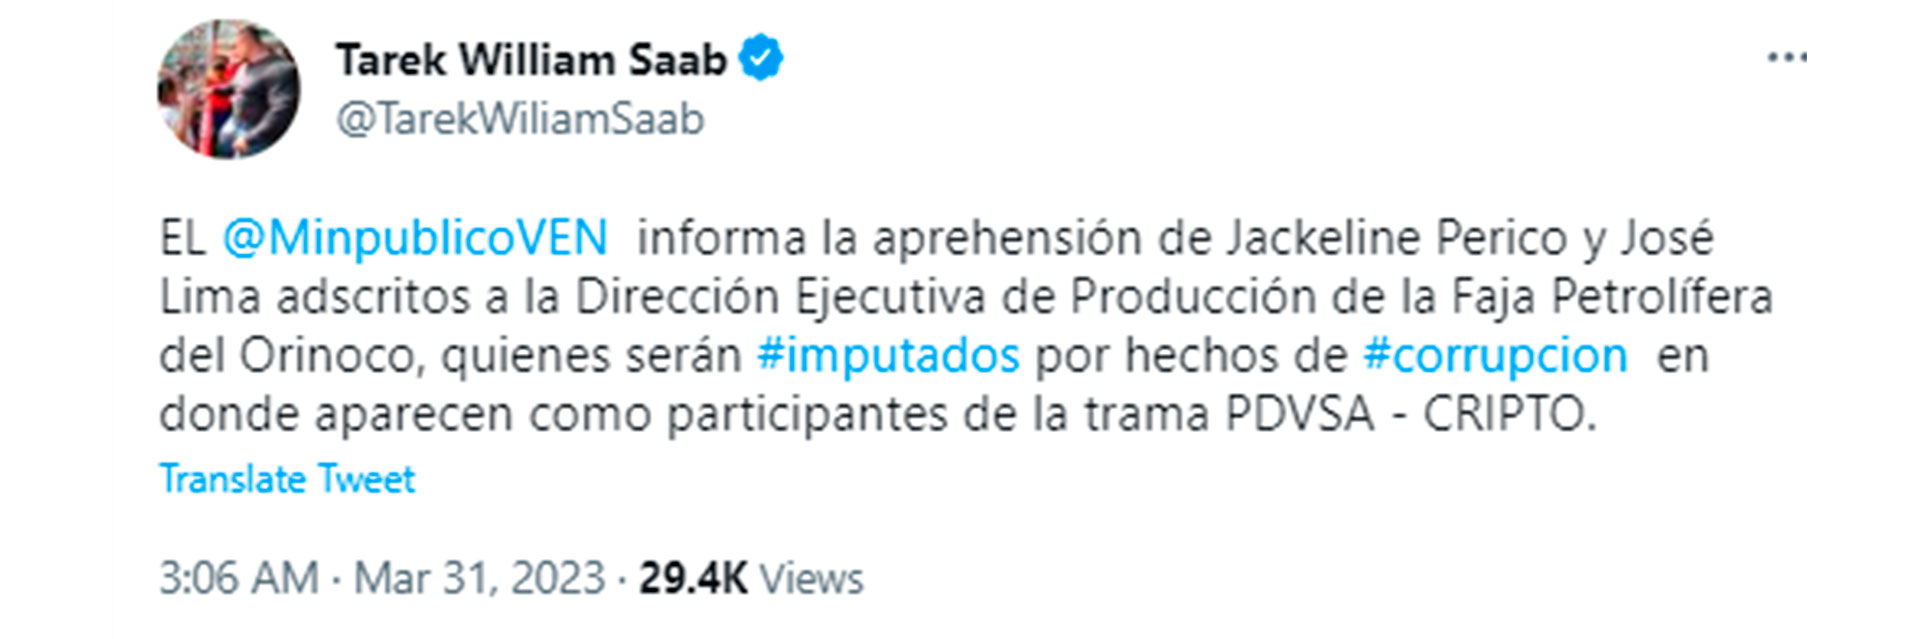 El mensaje de Tarek William Saab en Twitter